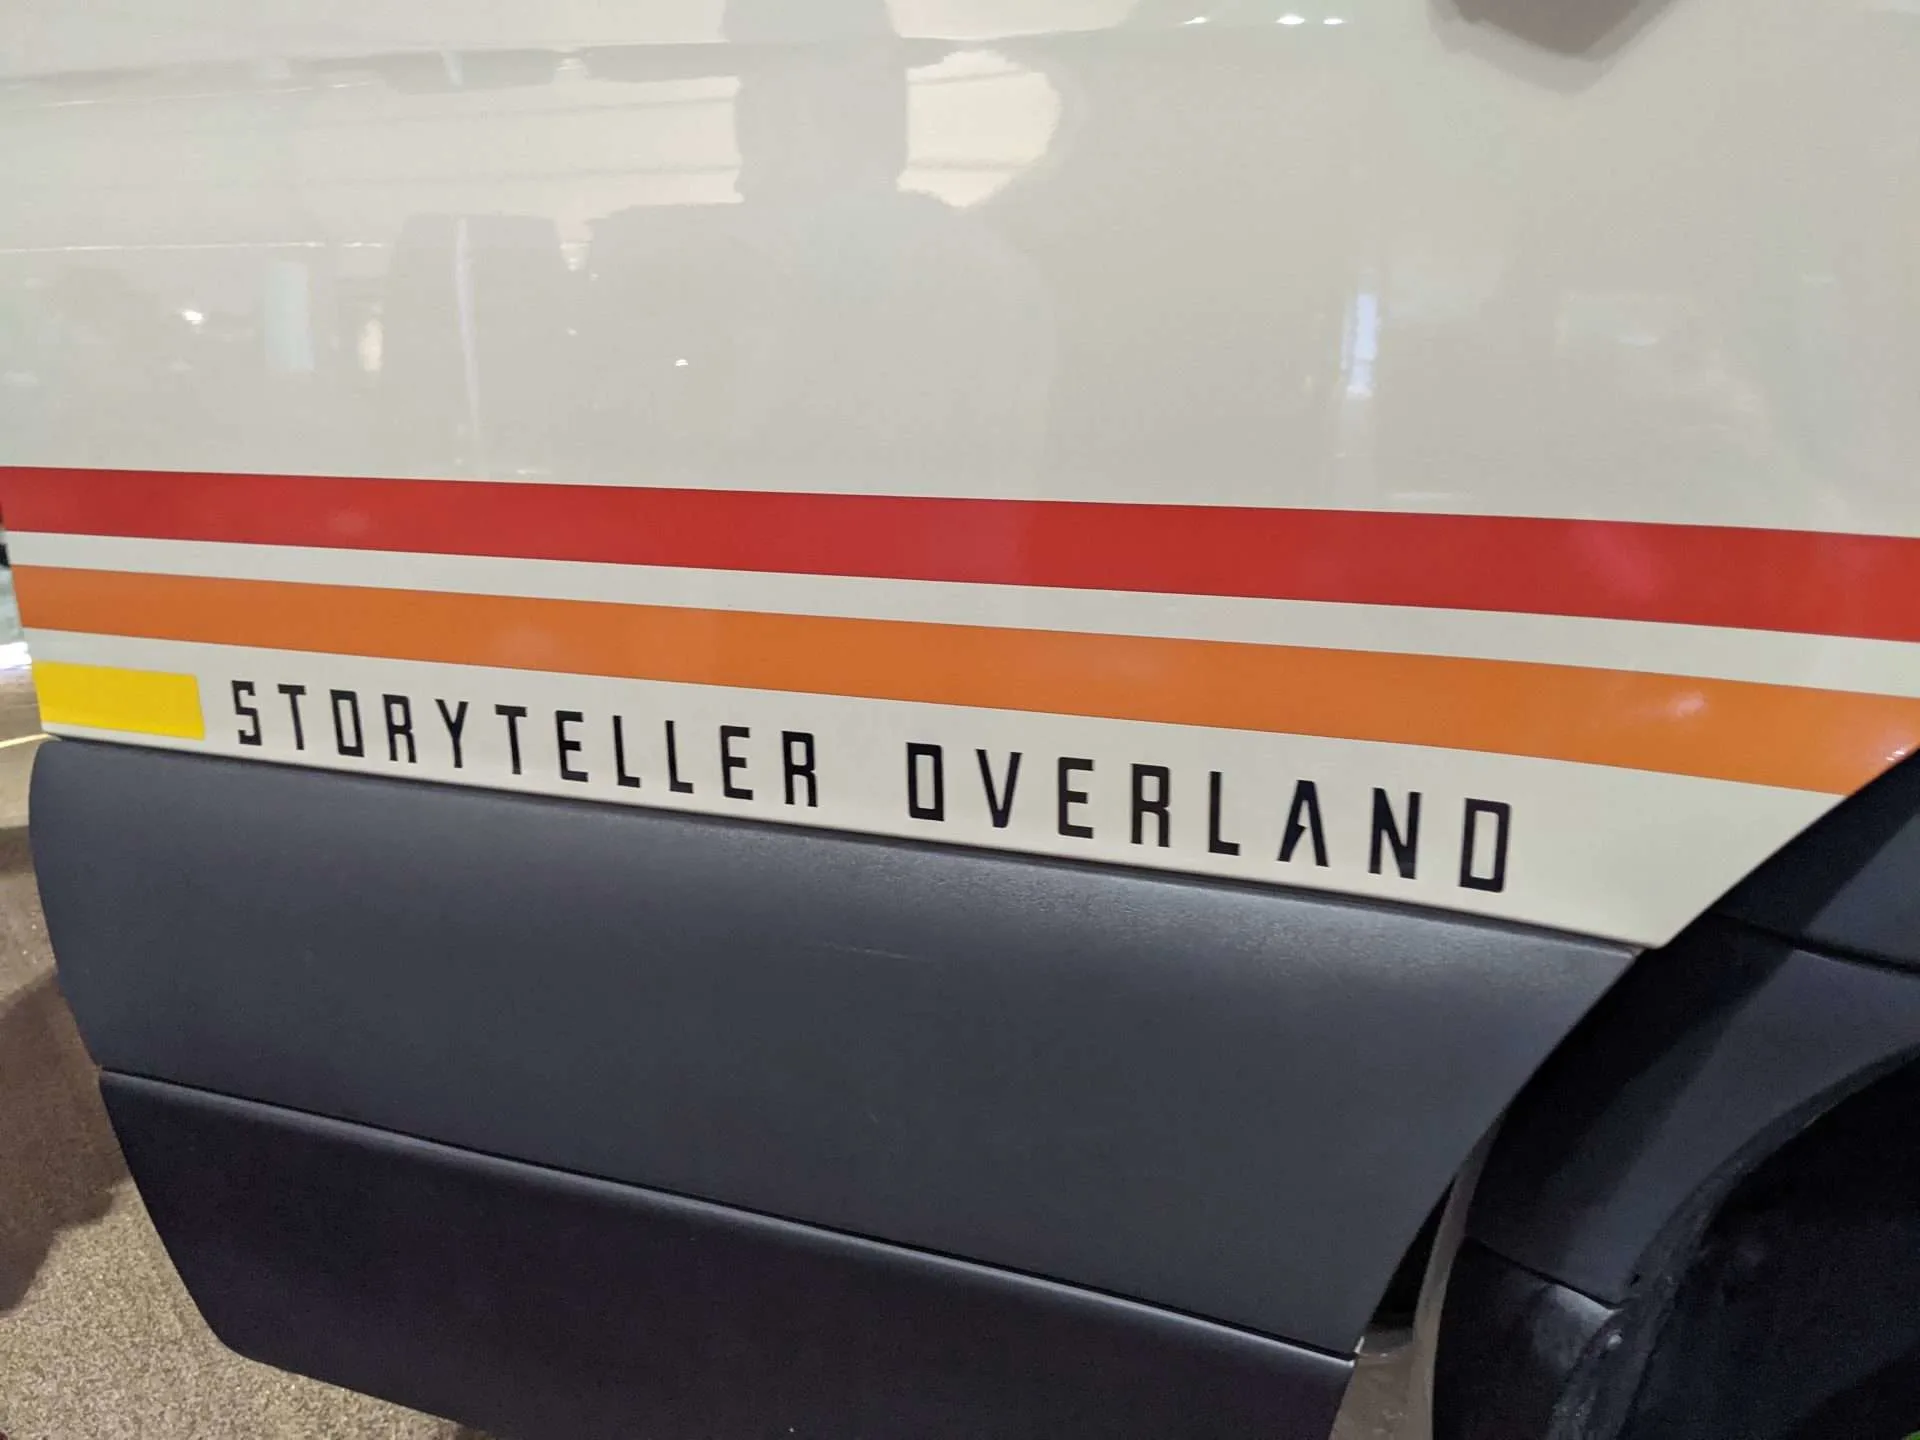 Storyteller Overland van logo on vehicle.